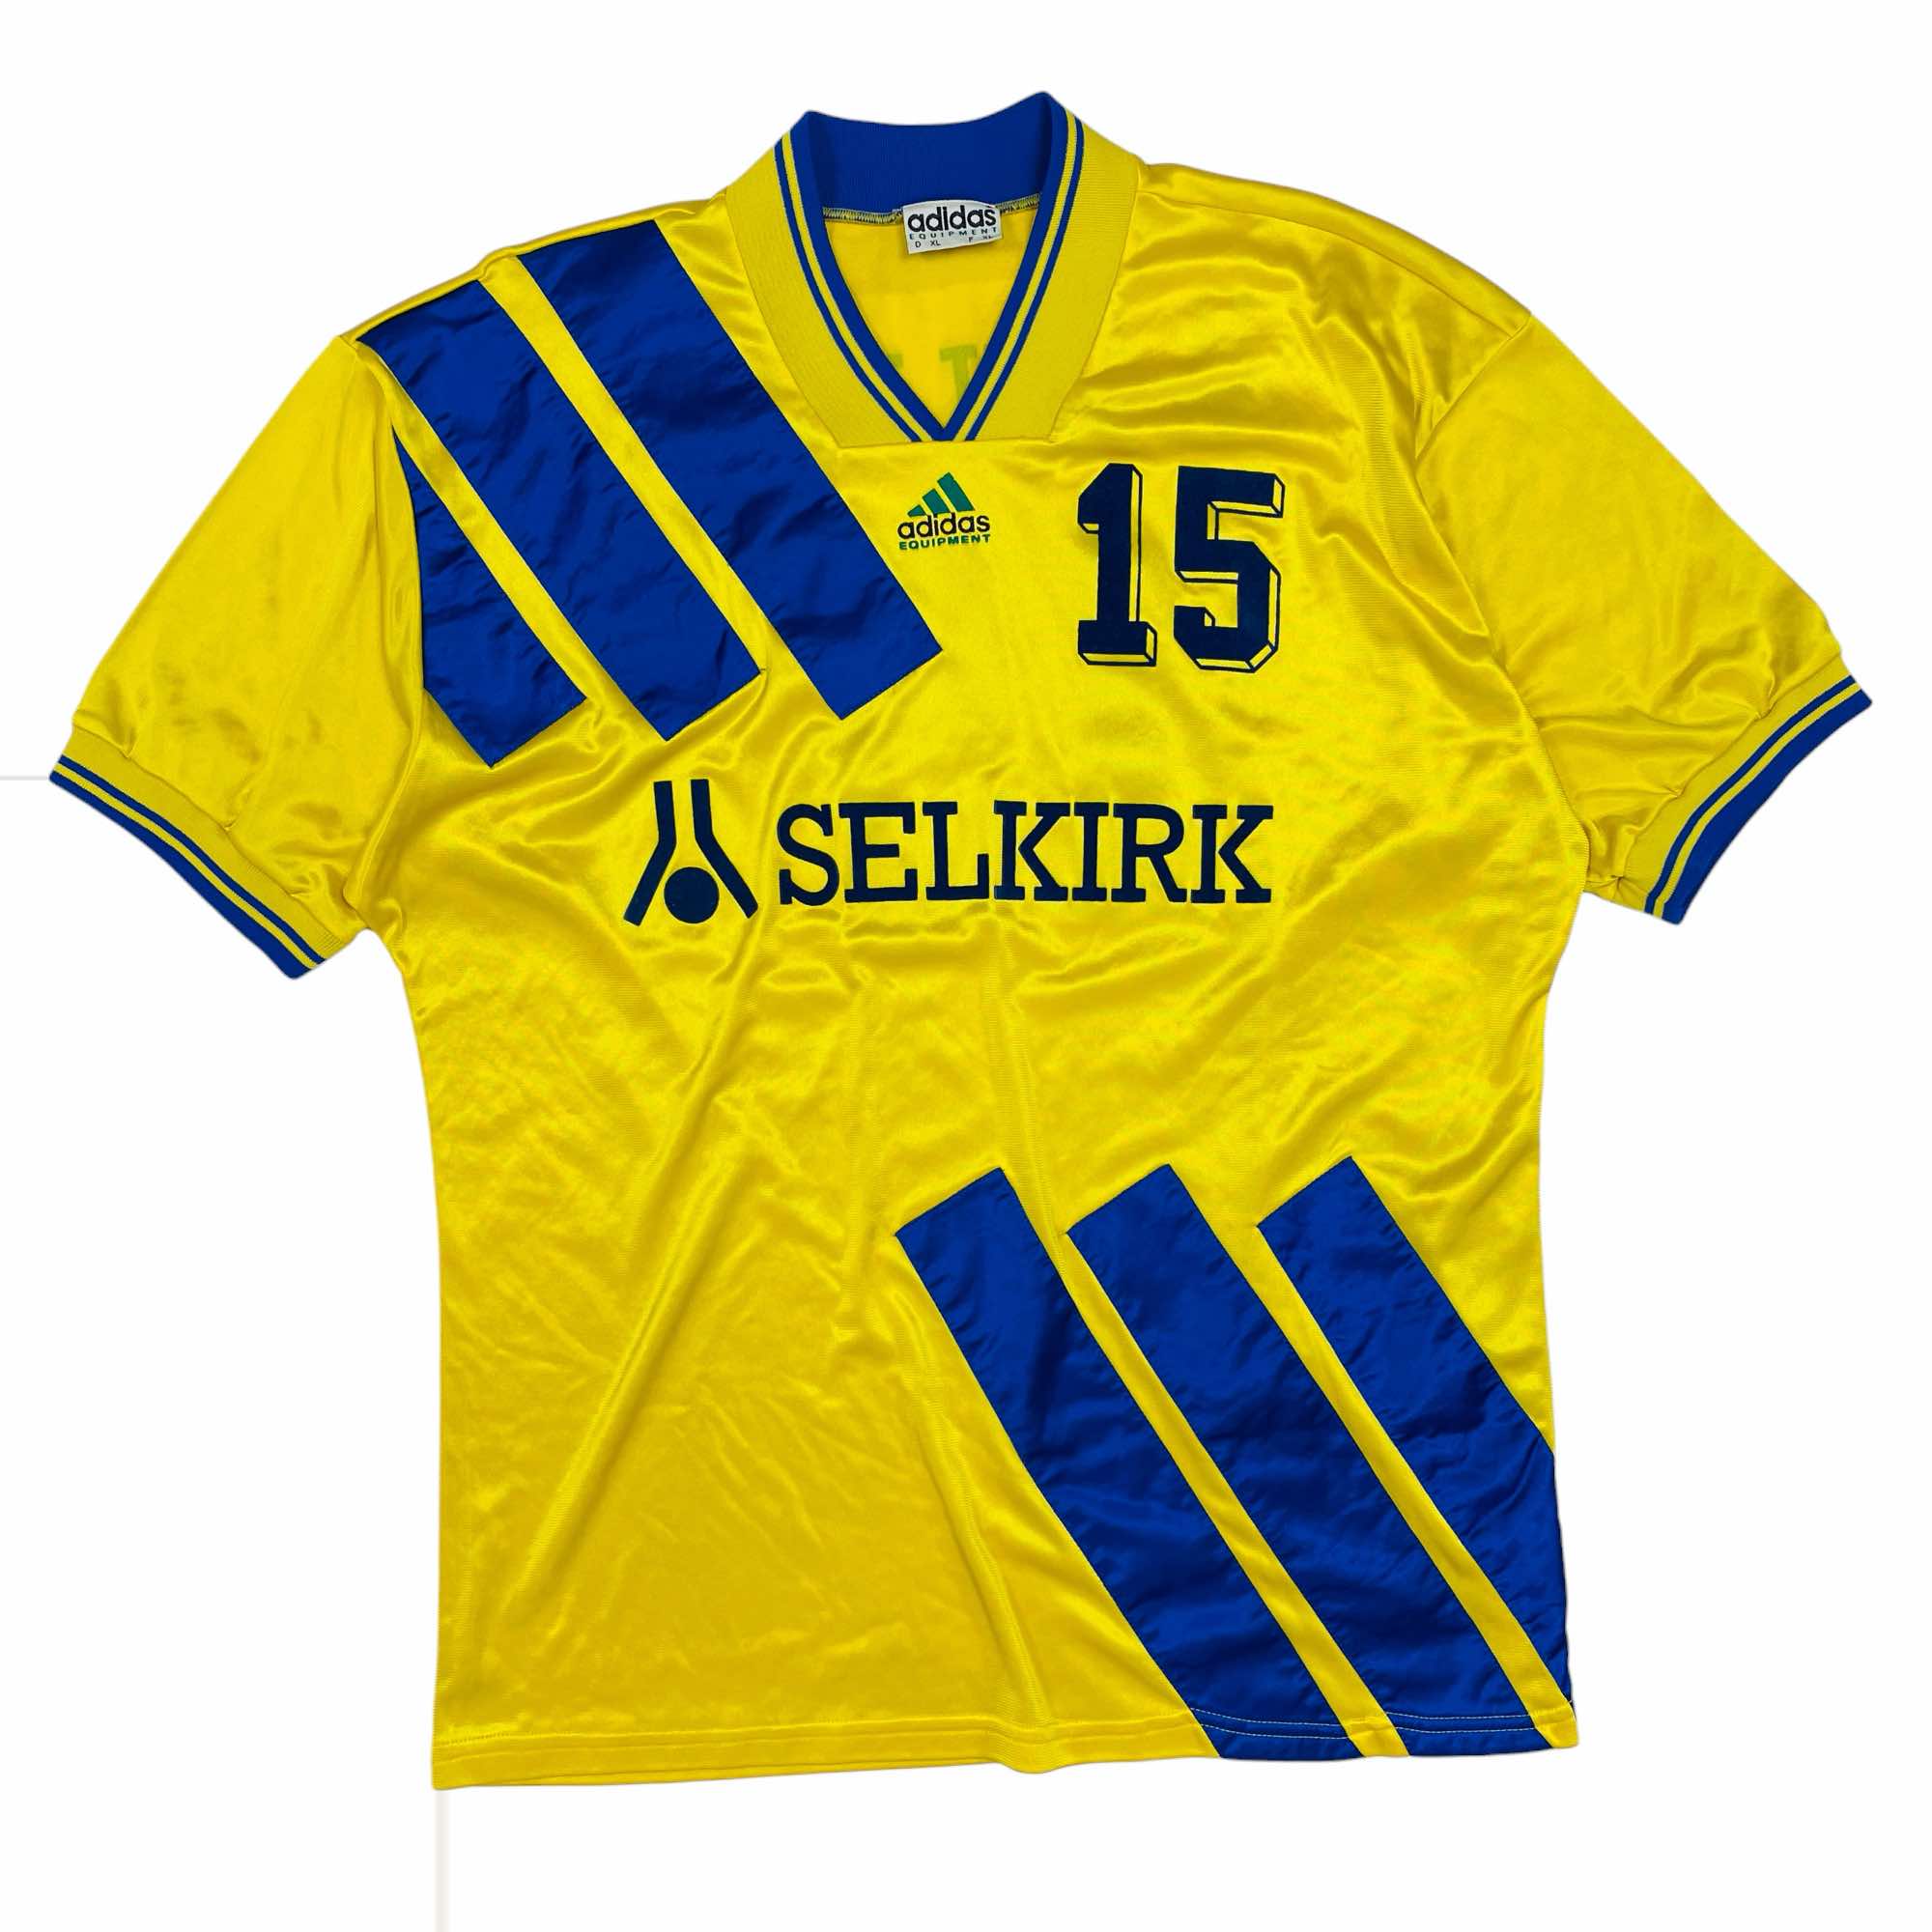 90s Adidas Football Shirt - XL